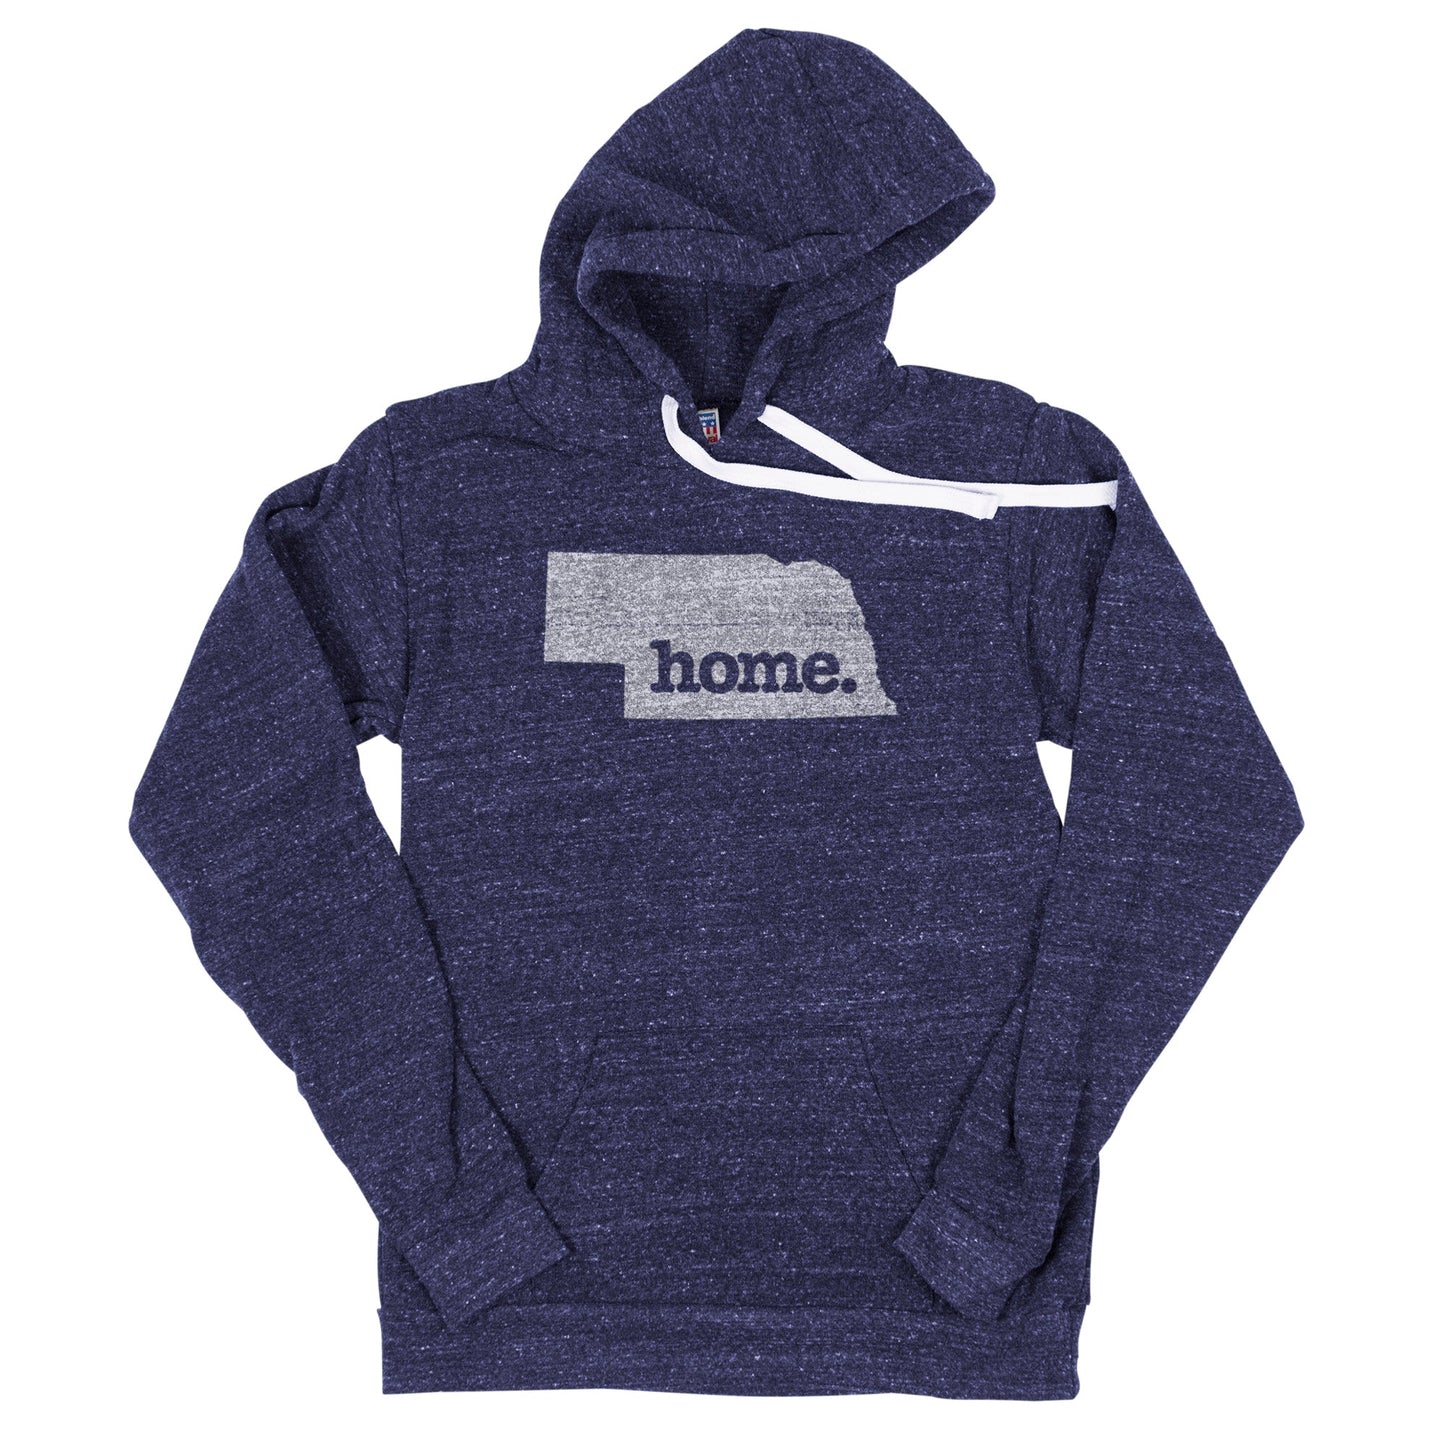 home. Men's Unisex Hoodie - Nebraska - CLEARANCE